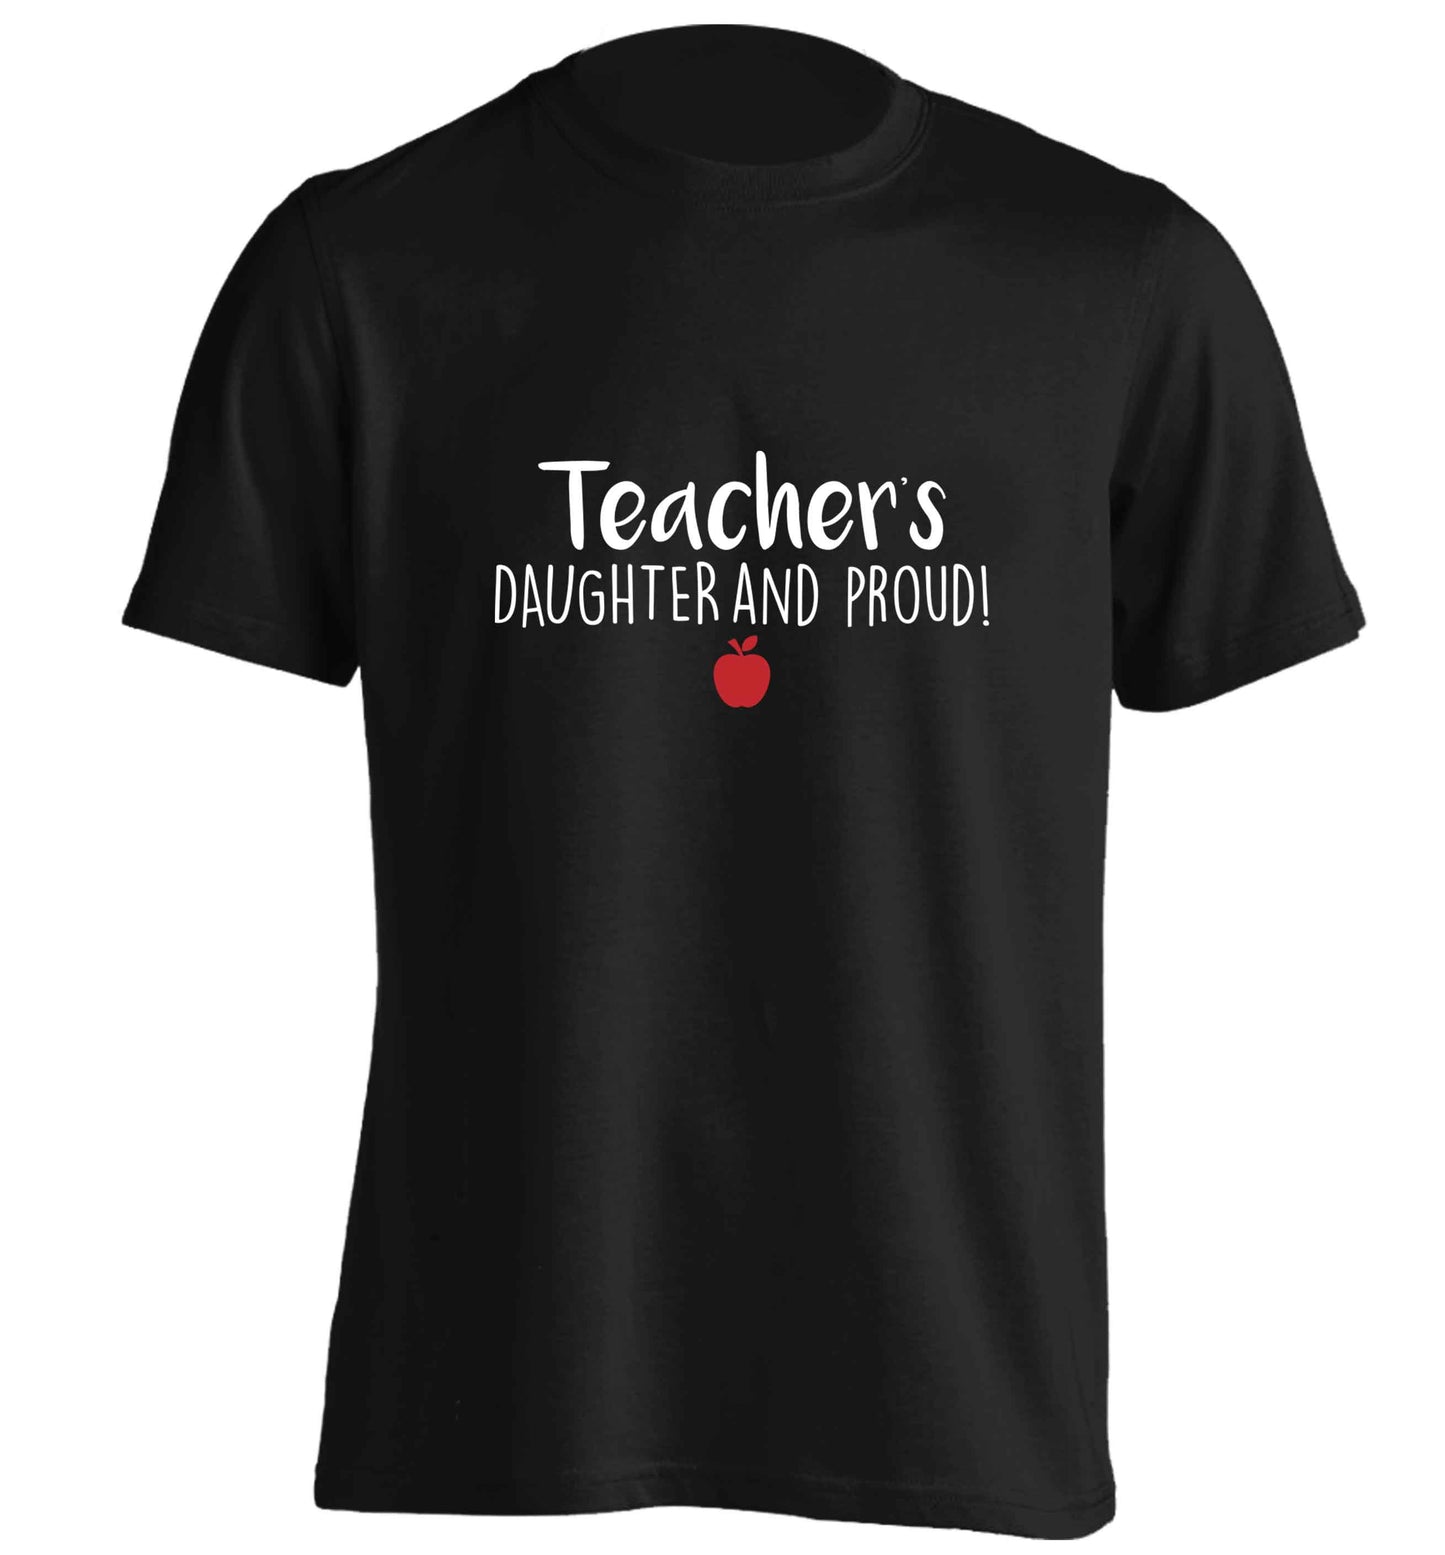 Teachers daughter and proud adults unisex black Tshirt 2XL